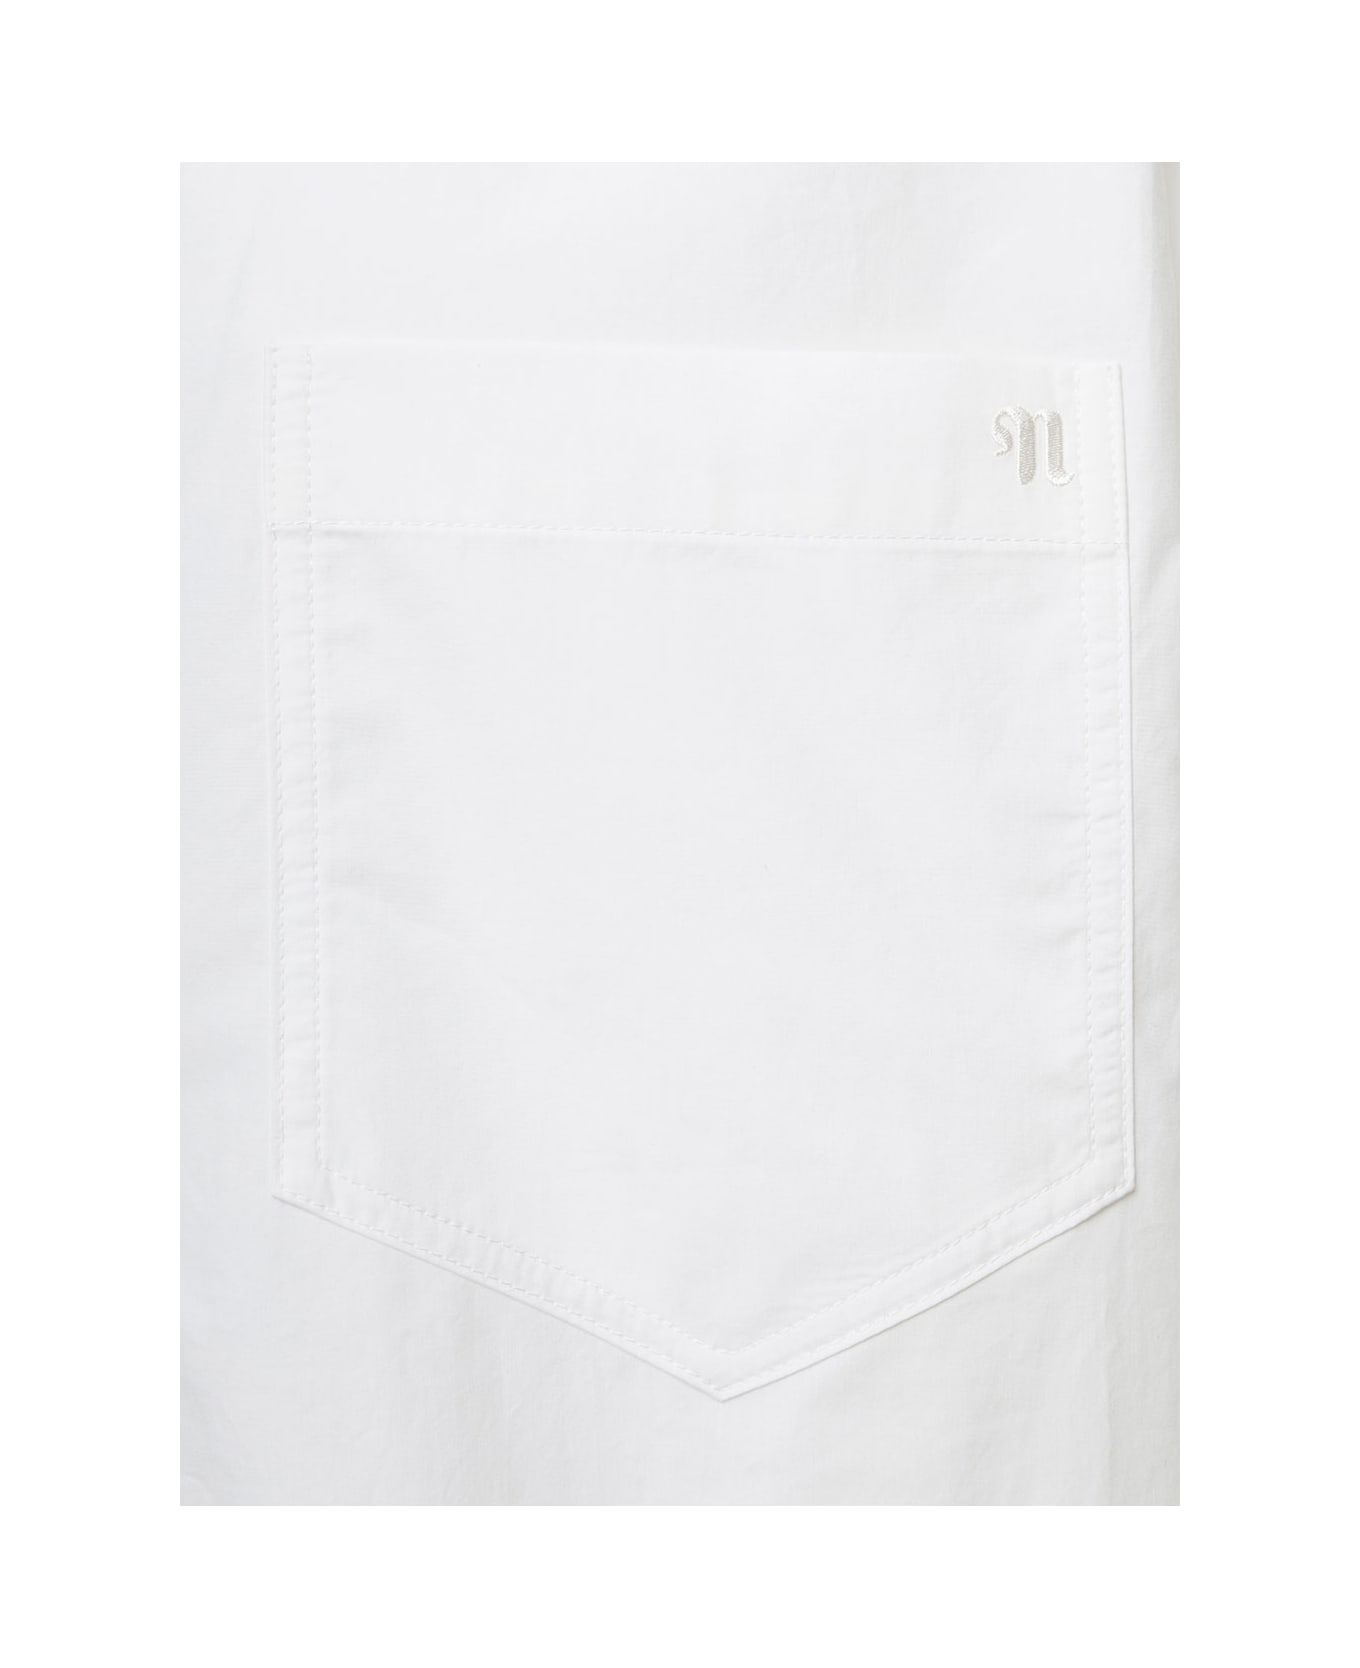 Nanushka 'adam' White Short Sleeve Shirt With Tonal Letter Embroidery In Cotton Man - White